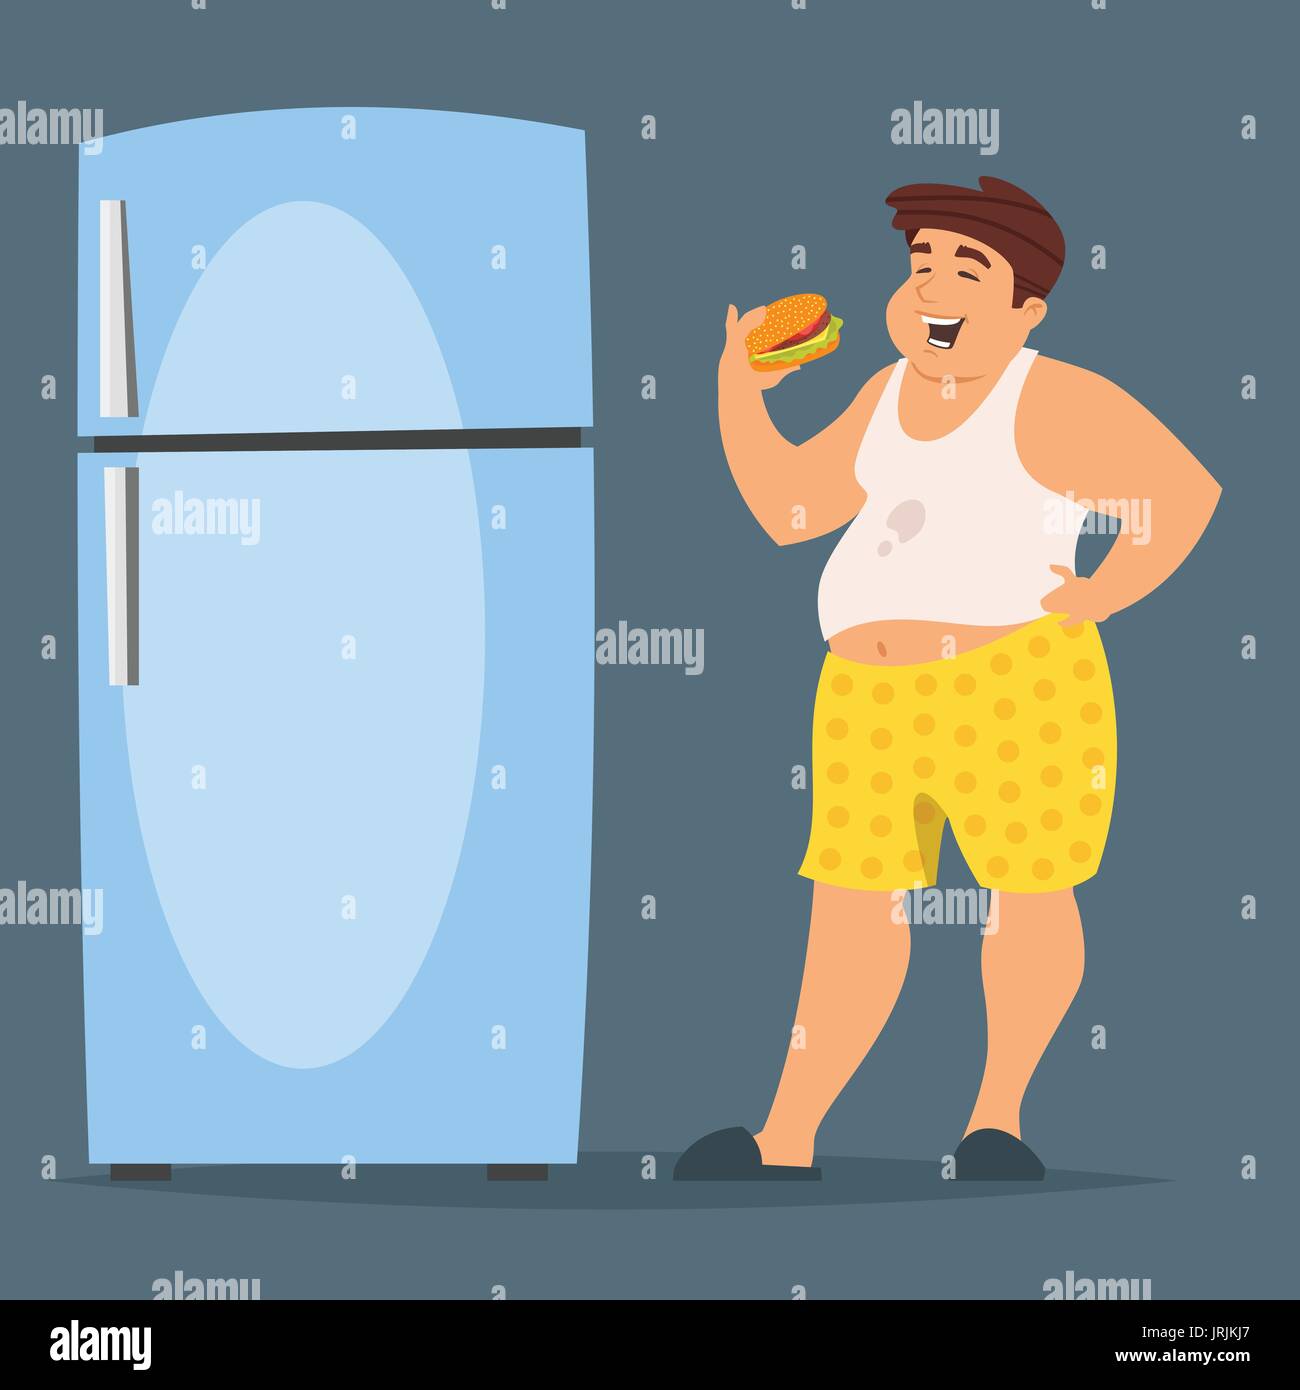 Vector cartoon style illustration of happy fat man character eating hamburger near fridge. Stock Vector